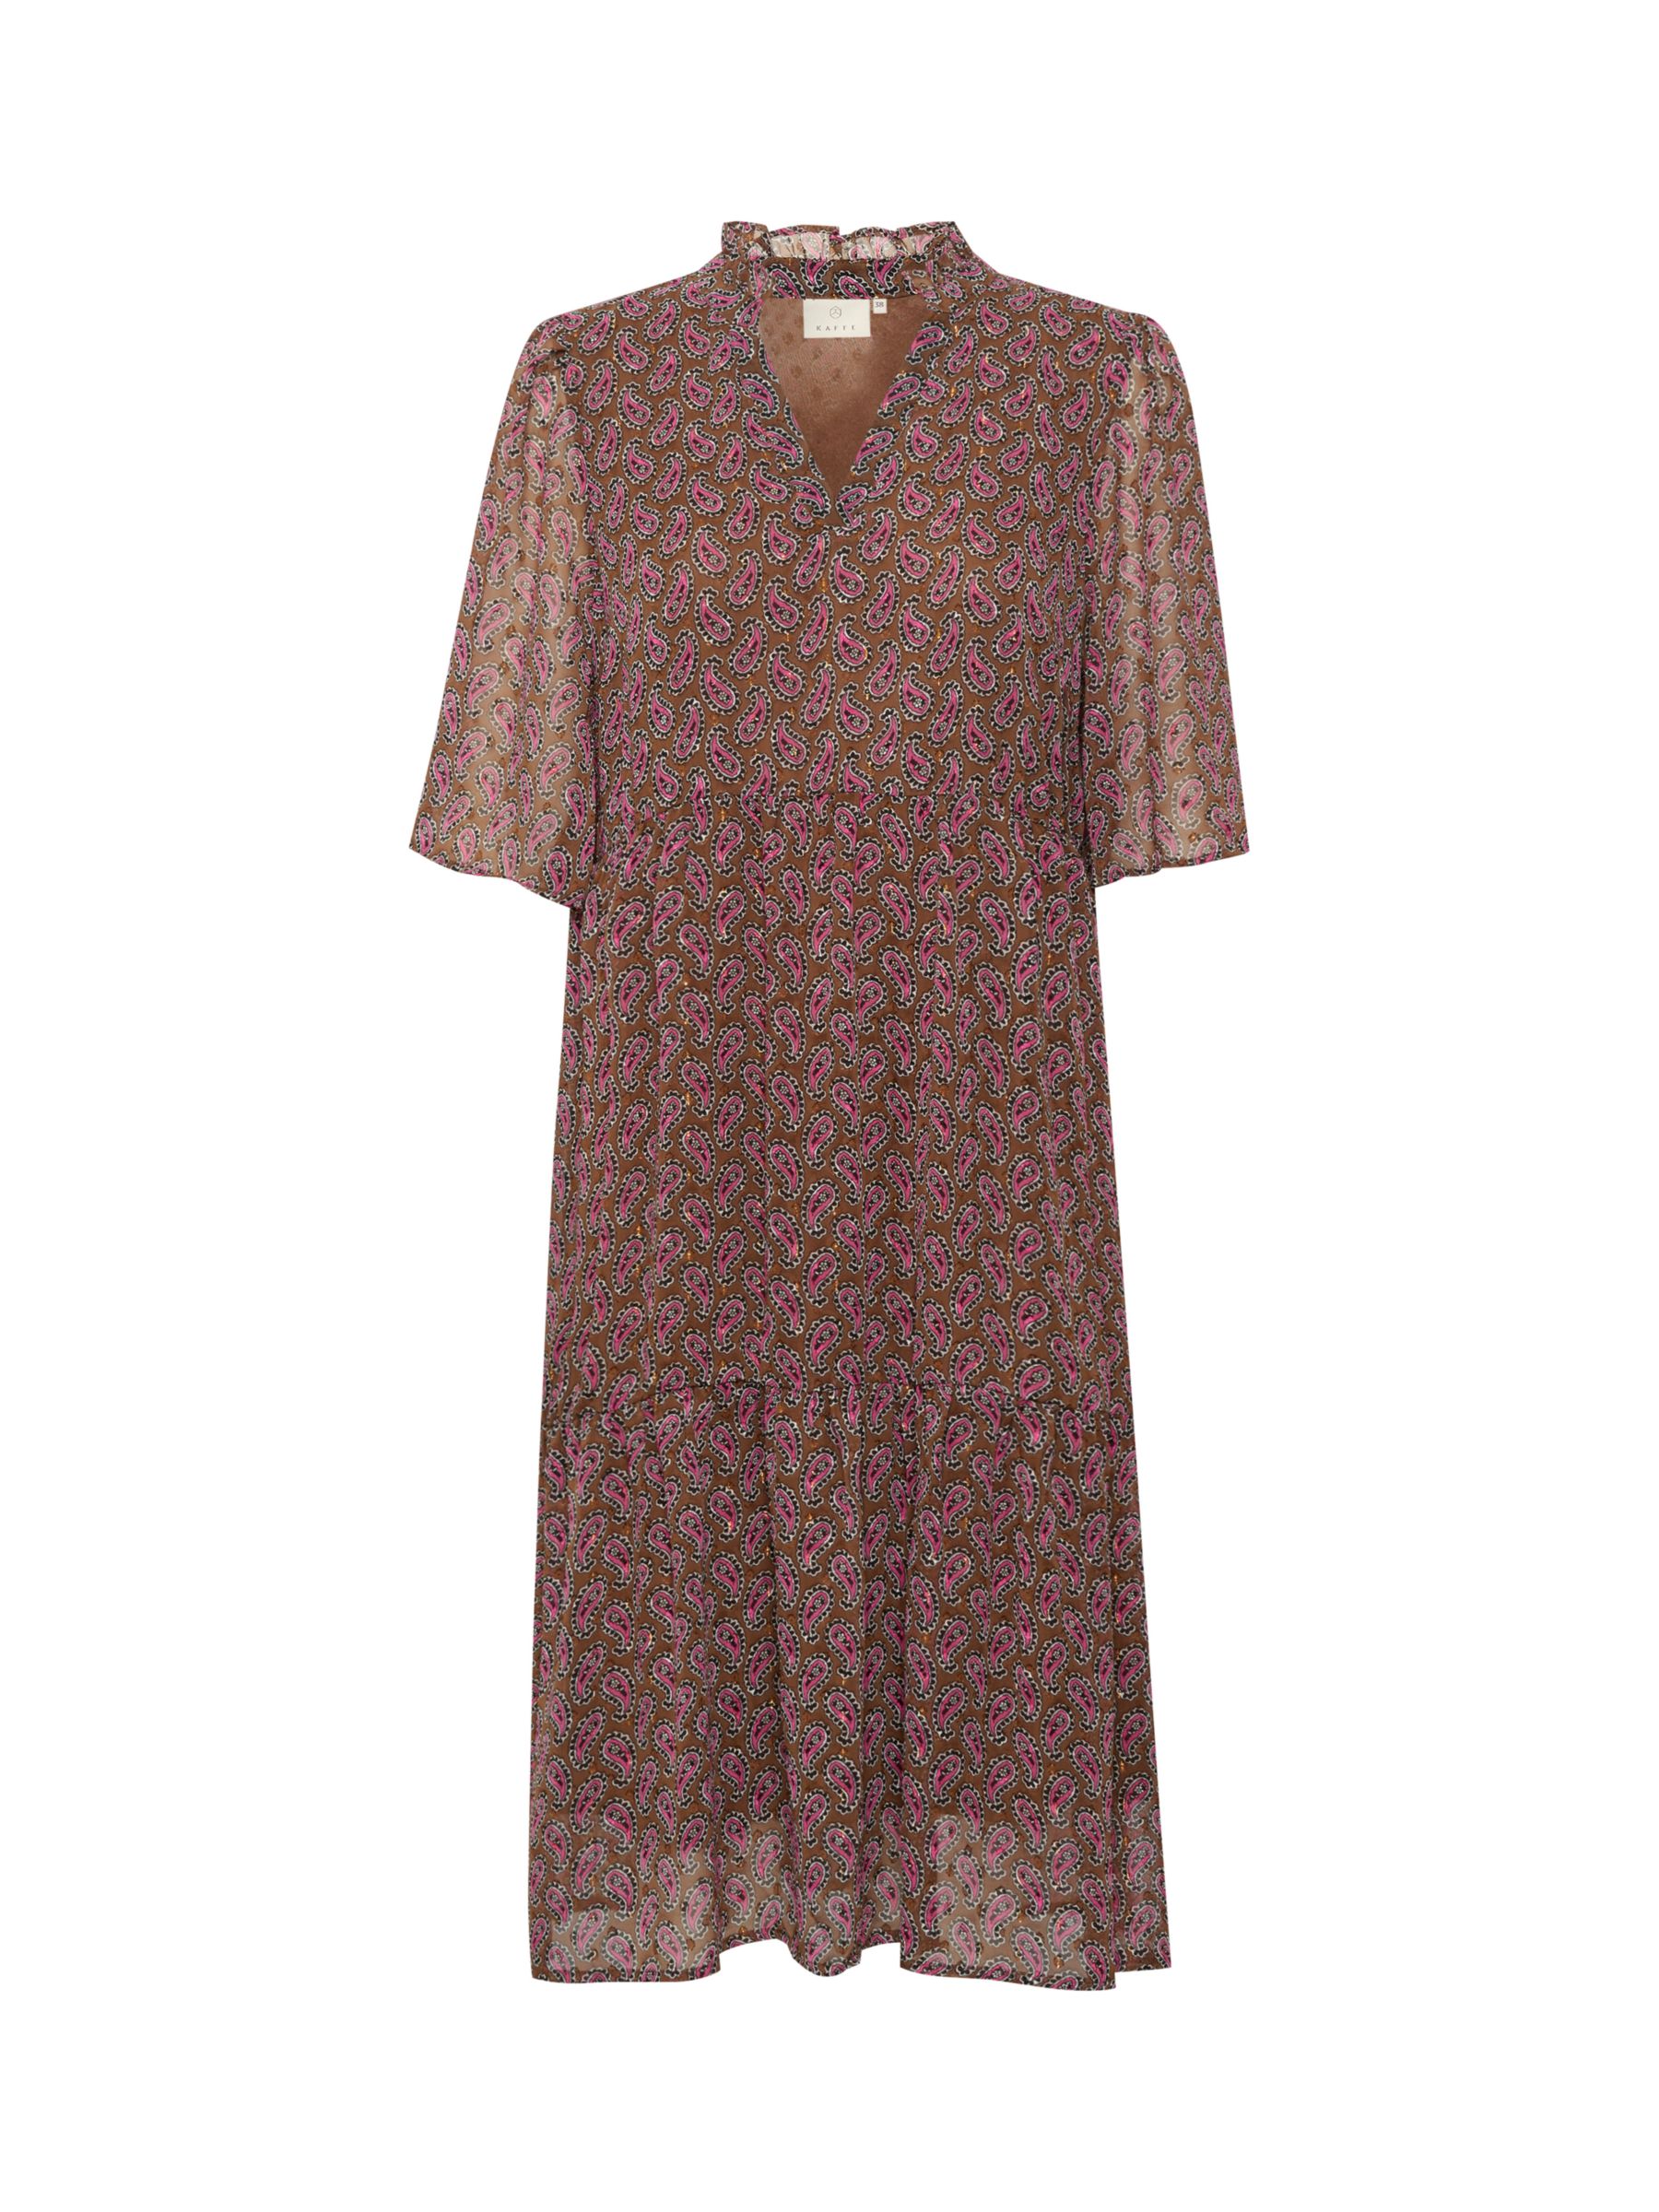 KAFFE Catalina Knee Length Chiffon Dress, Brown/Multi, 14